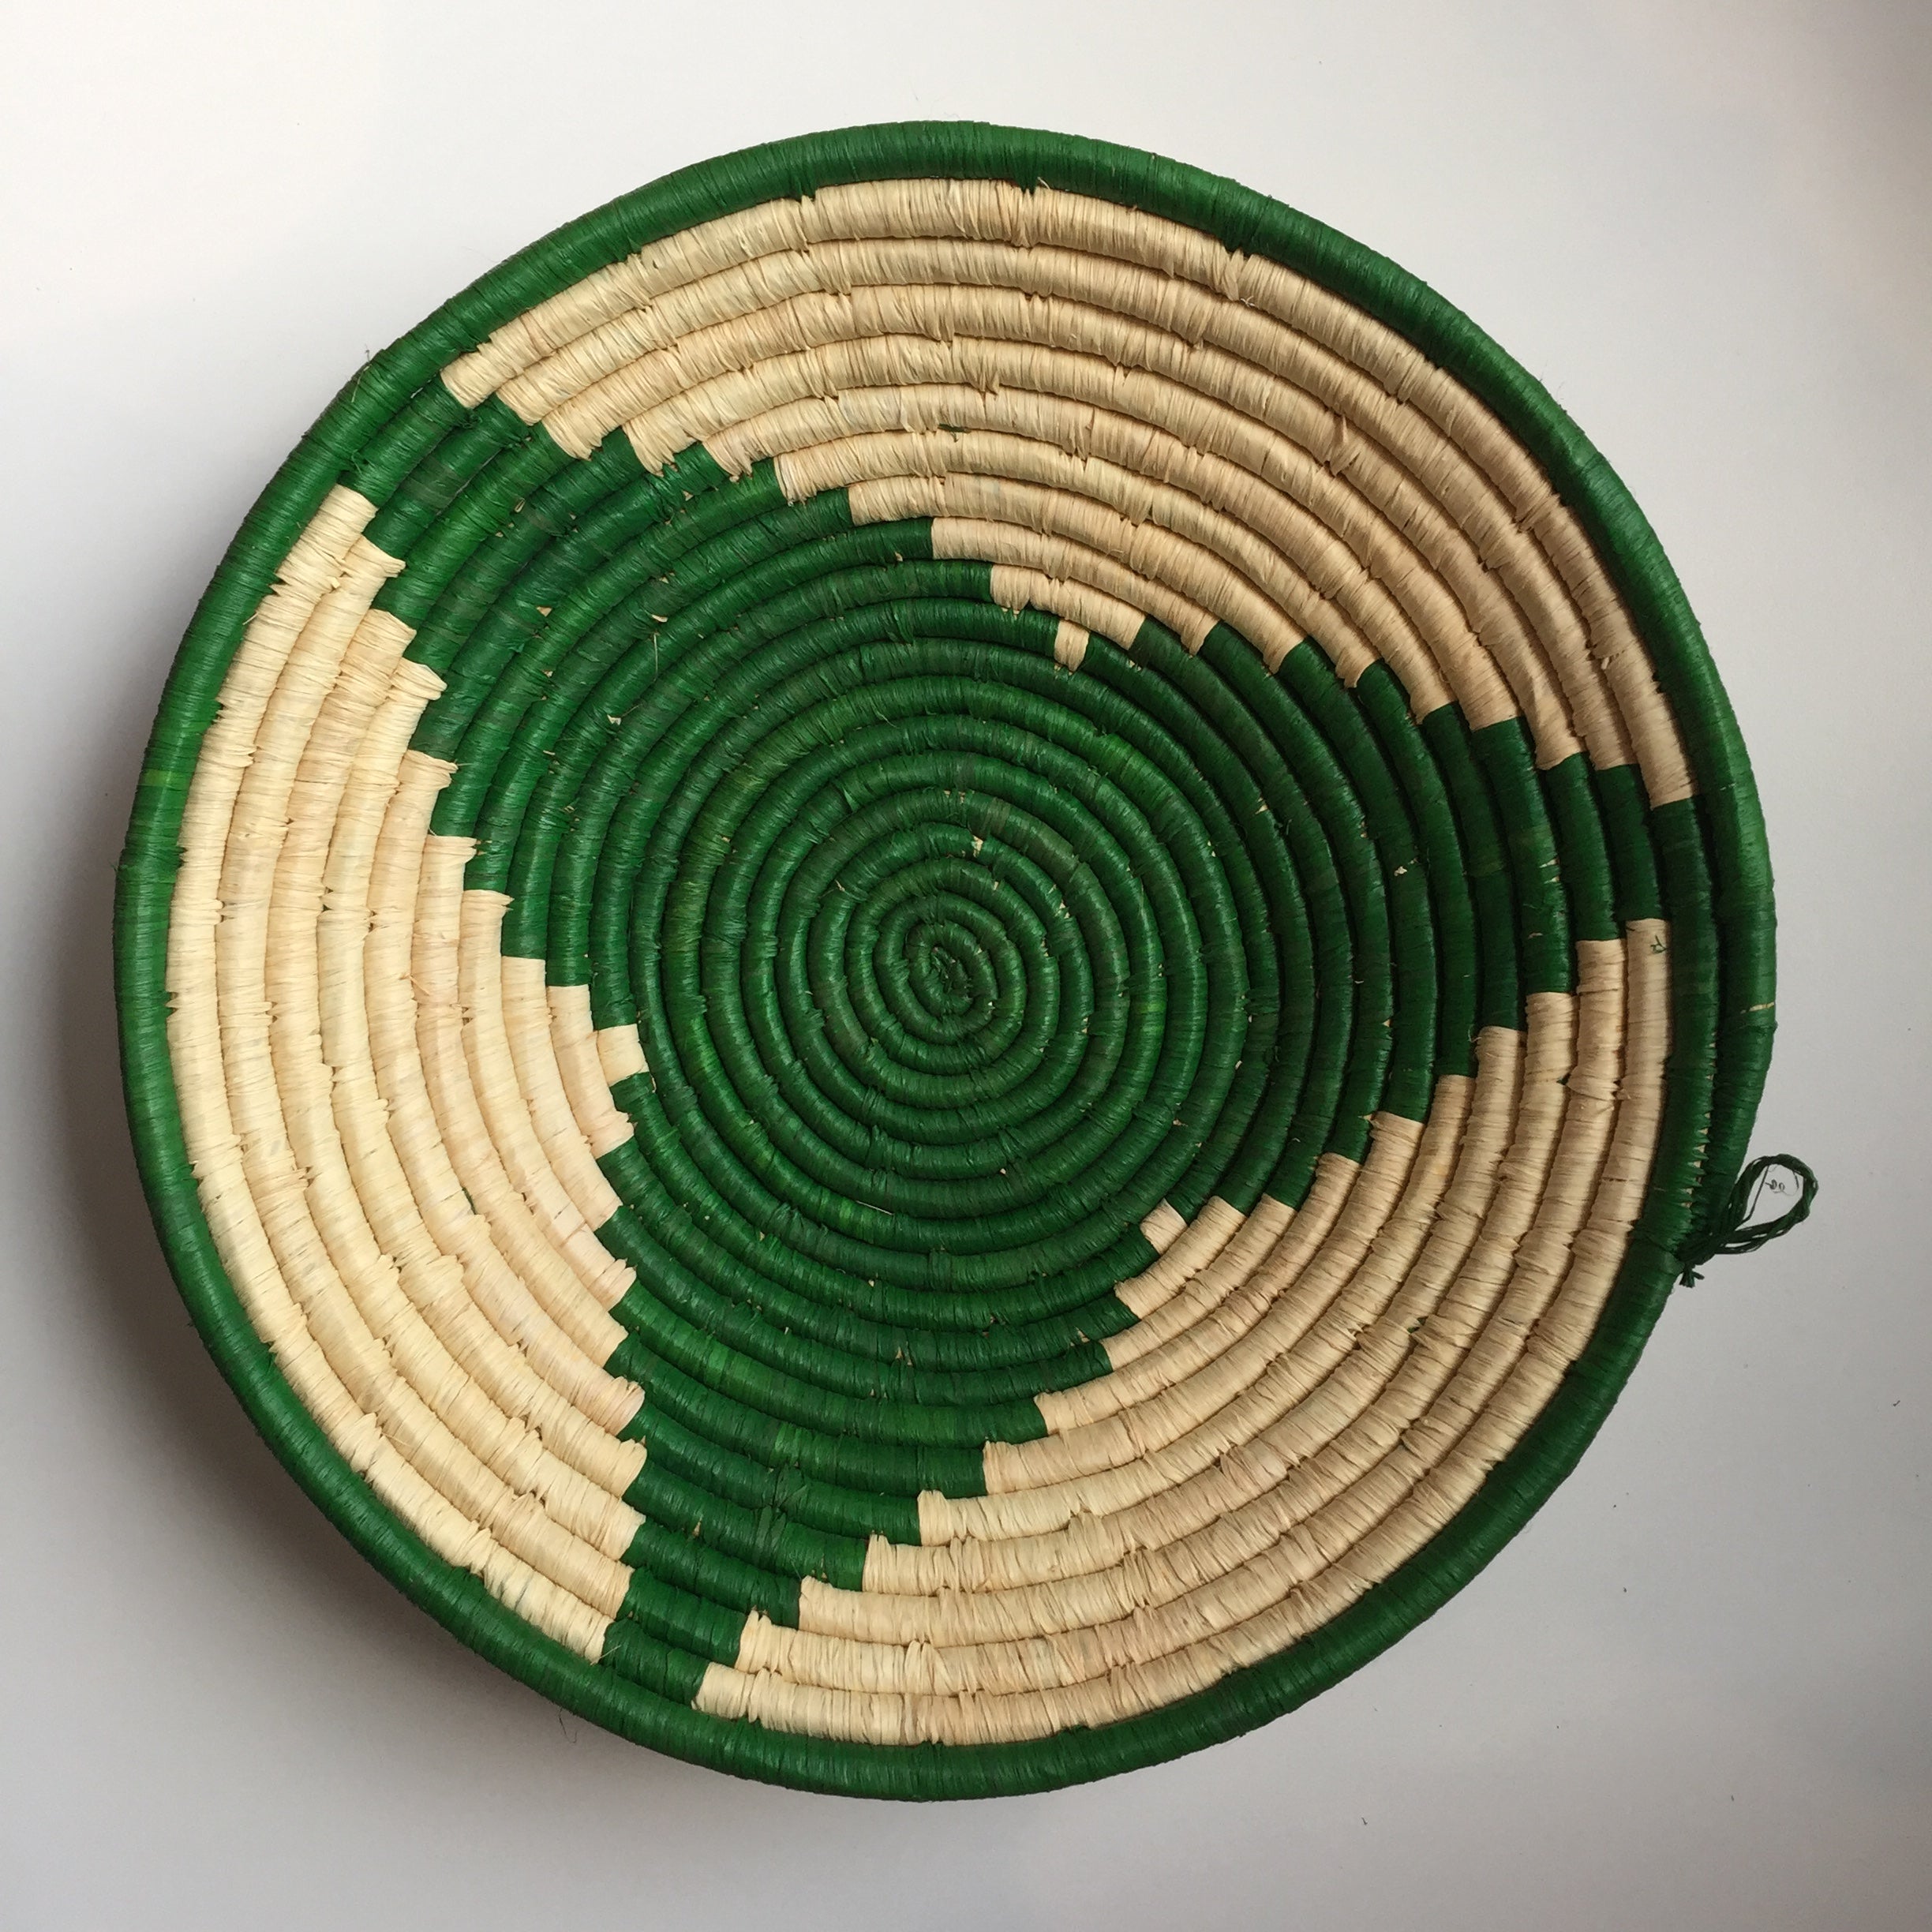 Green star woven basket